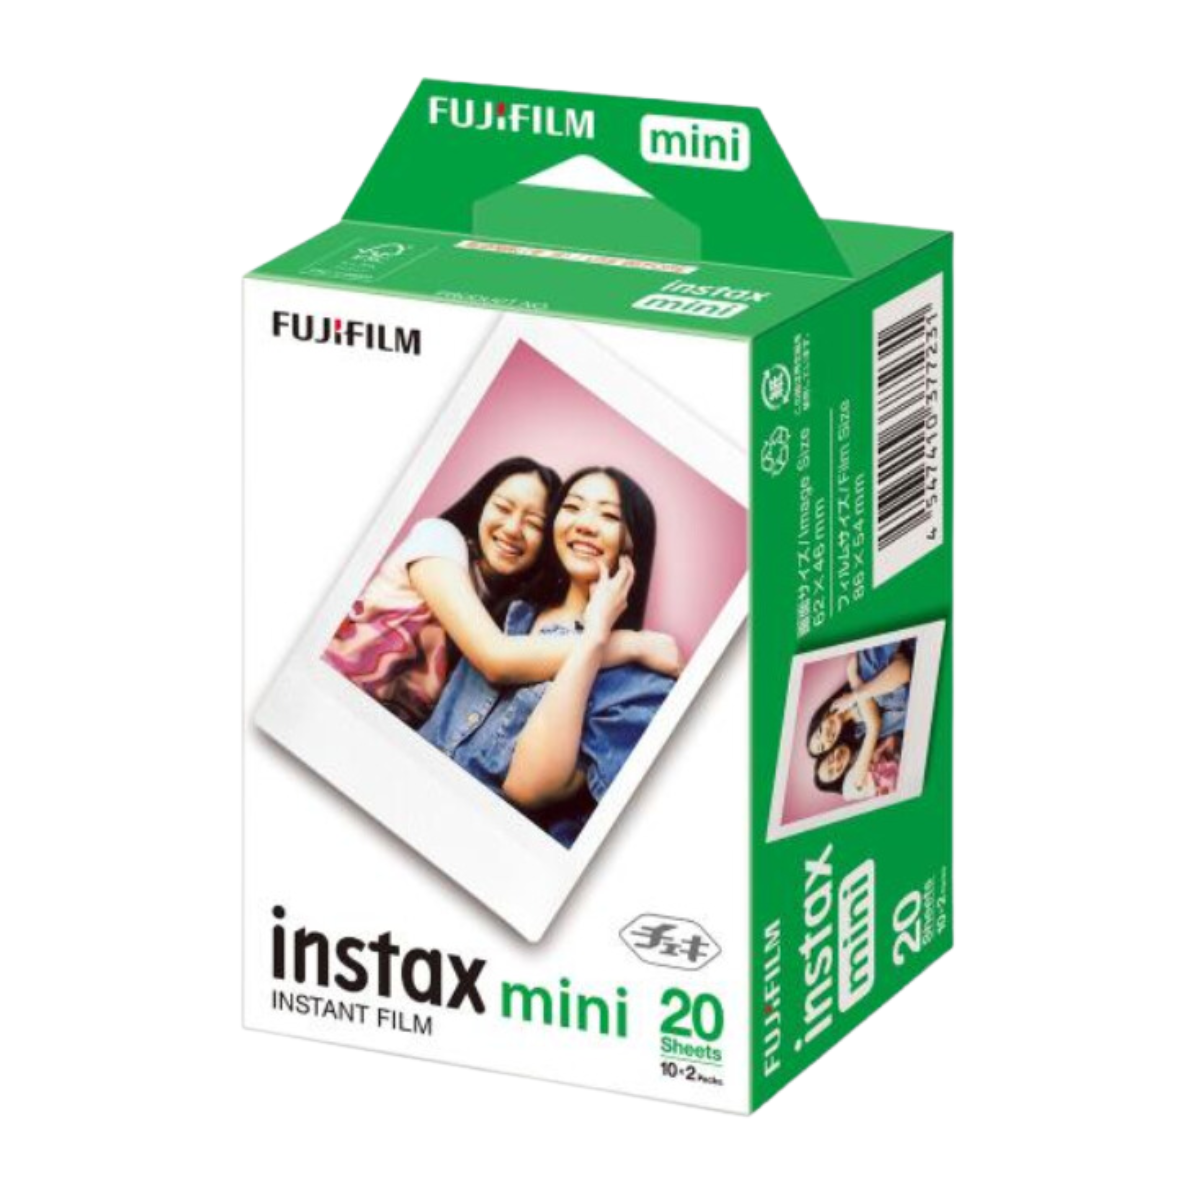  Fuji плёнка мгновенный цвет плёнка instax mini 2 упаковка товар (10 листов входит ×2)FUJIFILM 4547410377231 Cheki Cheki специальный плёнка 